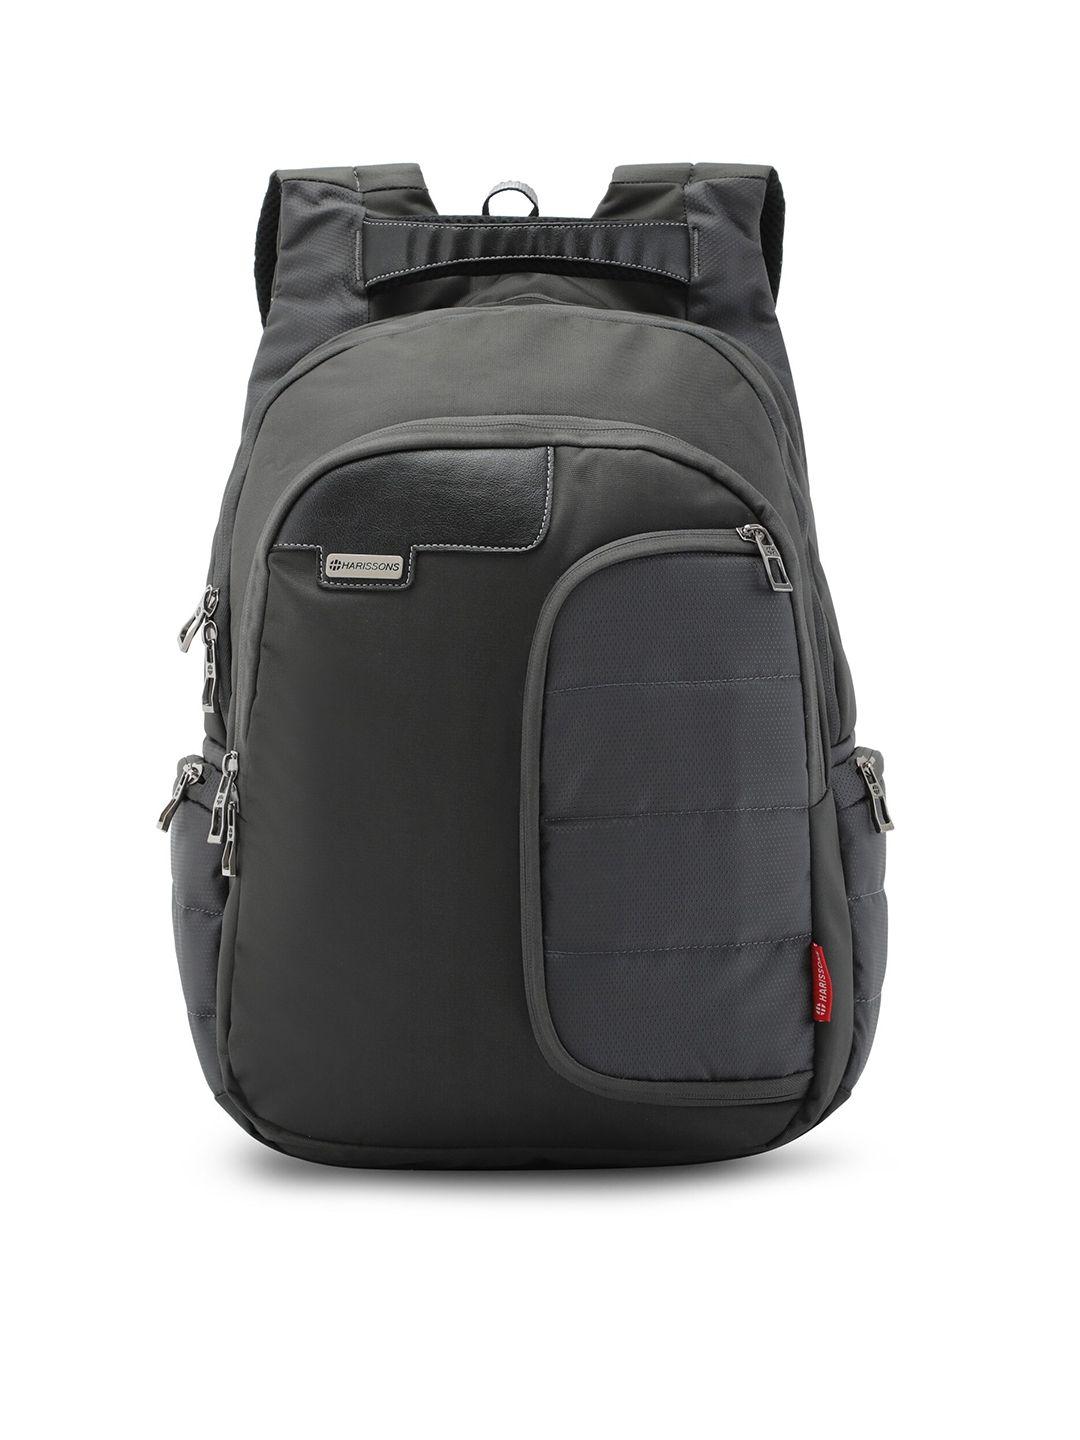 harissons grey & black laptop backpack